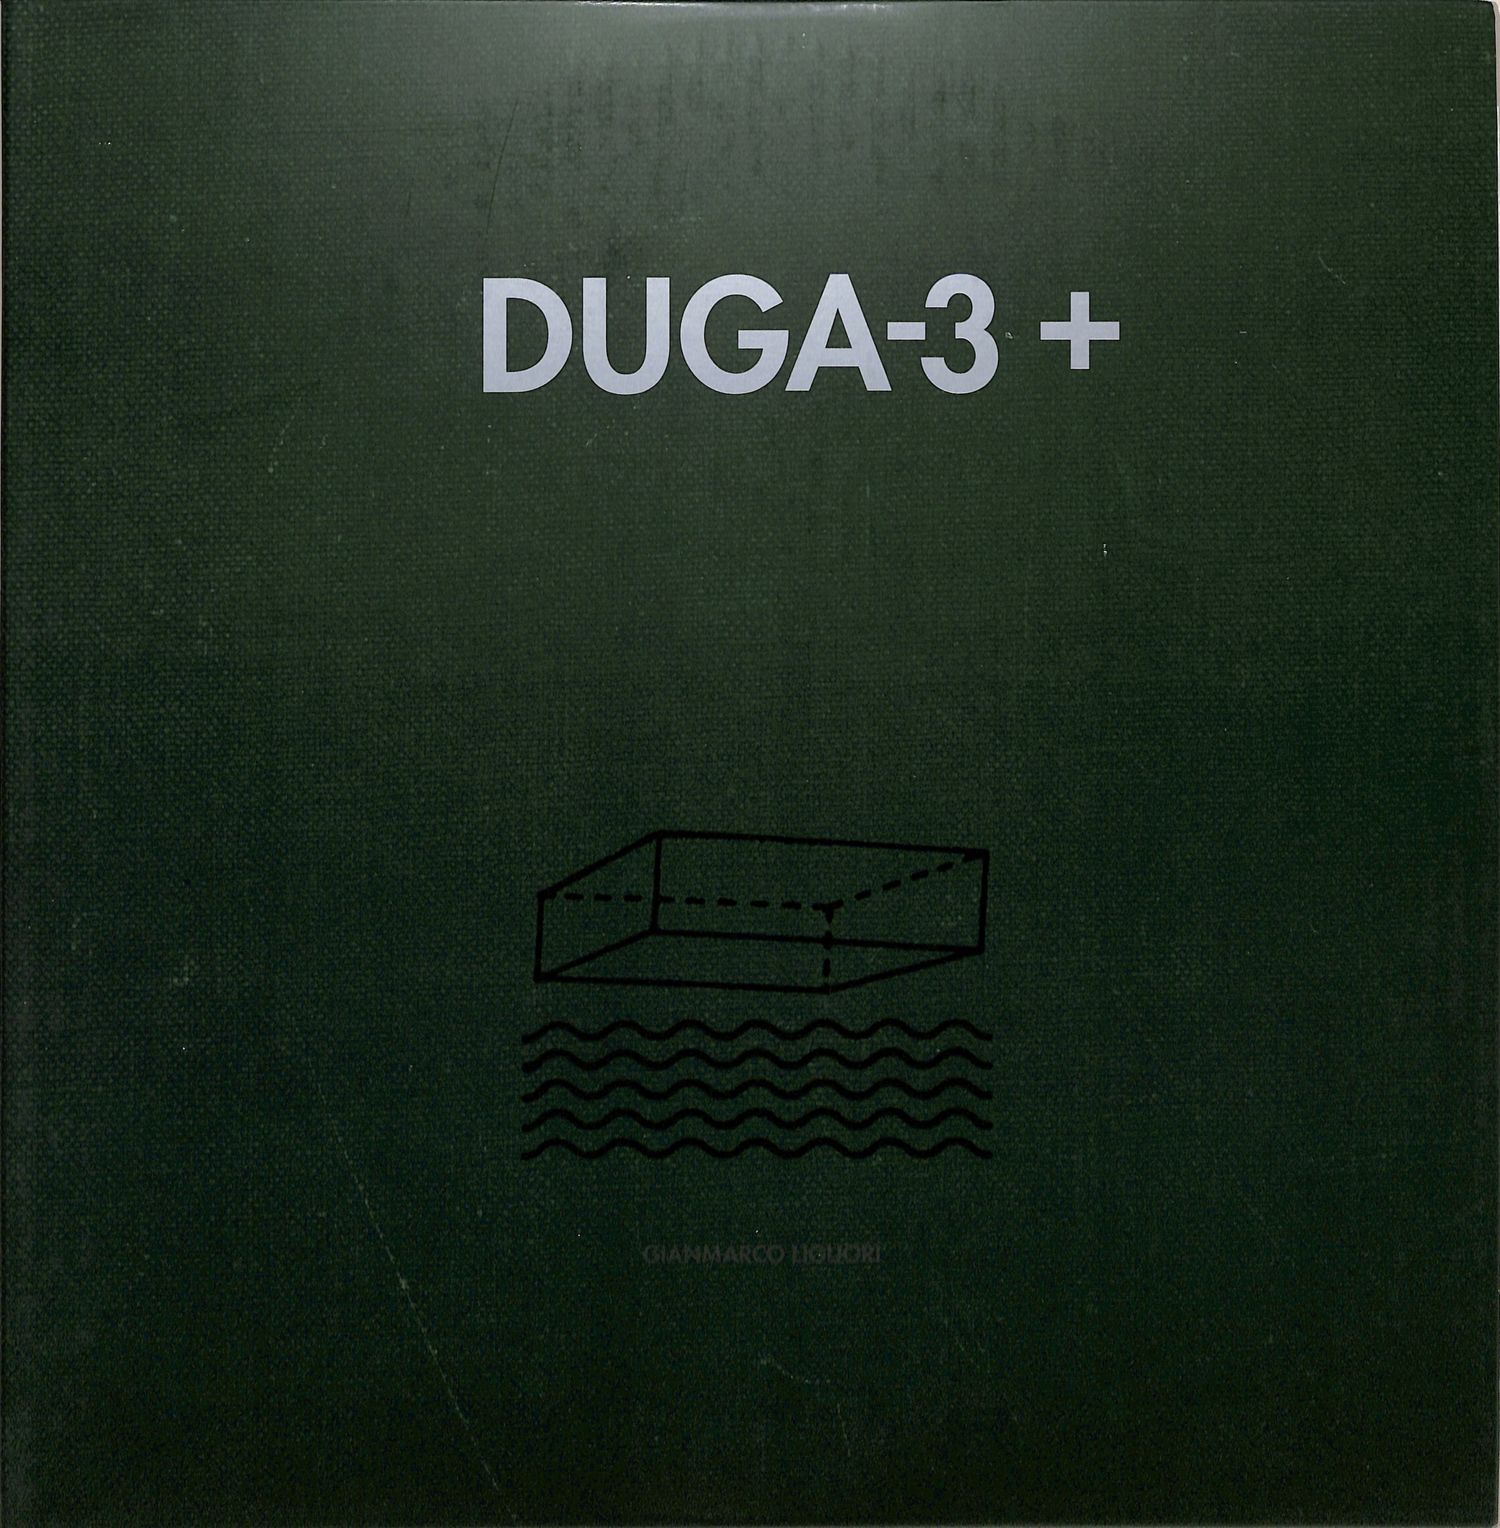 Gianmarco Liguori - DUGA-3+ 